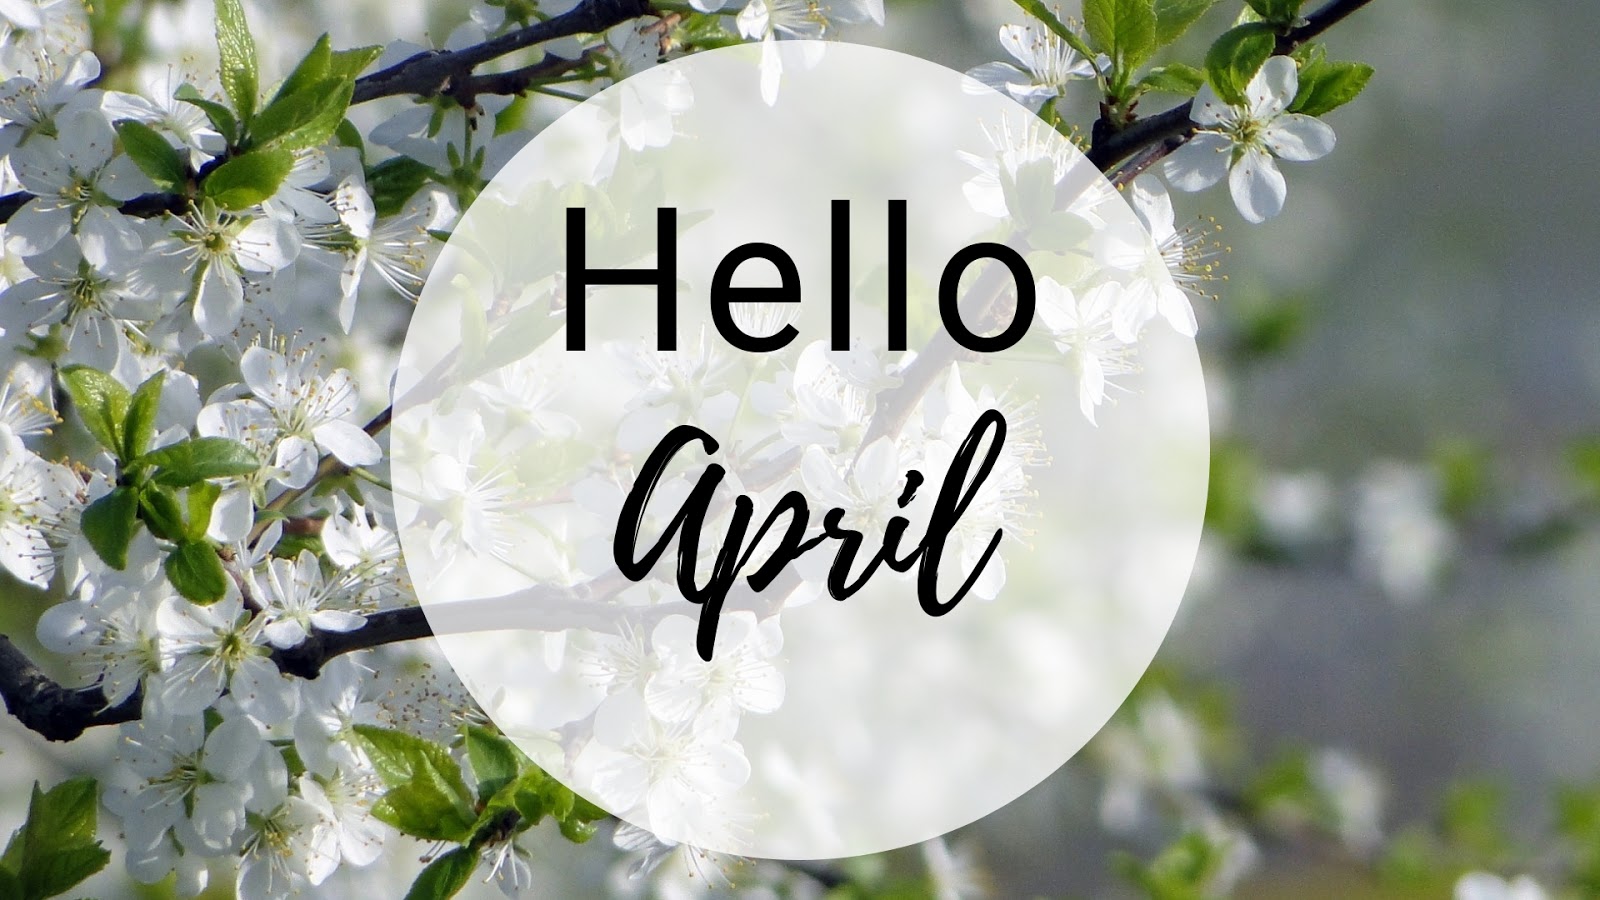 Привет апрель картинки с надписями. Привет апрель. Картинка hello. Hello март. Hello апрель картинки.